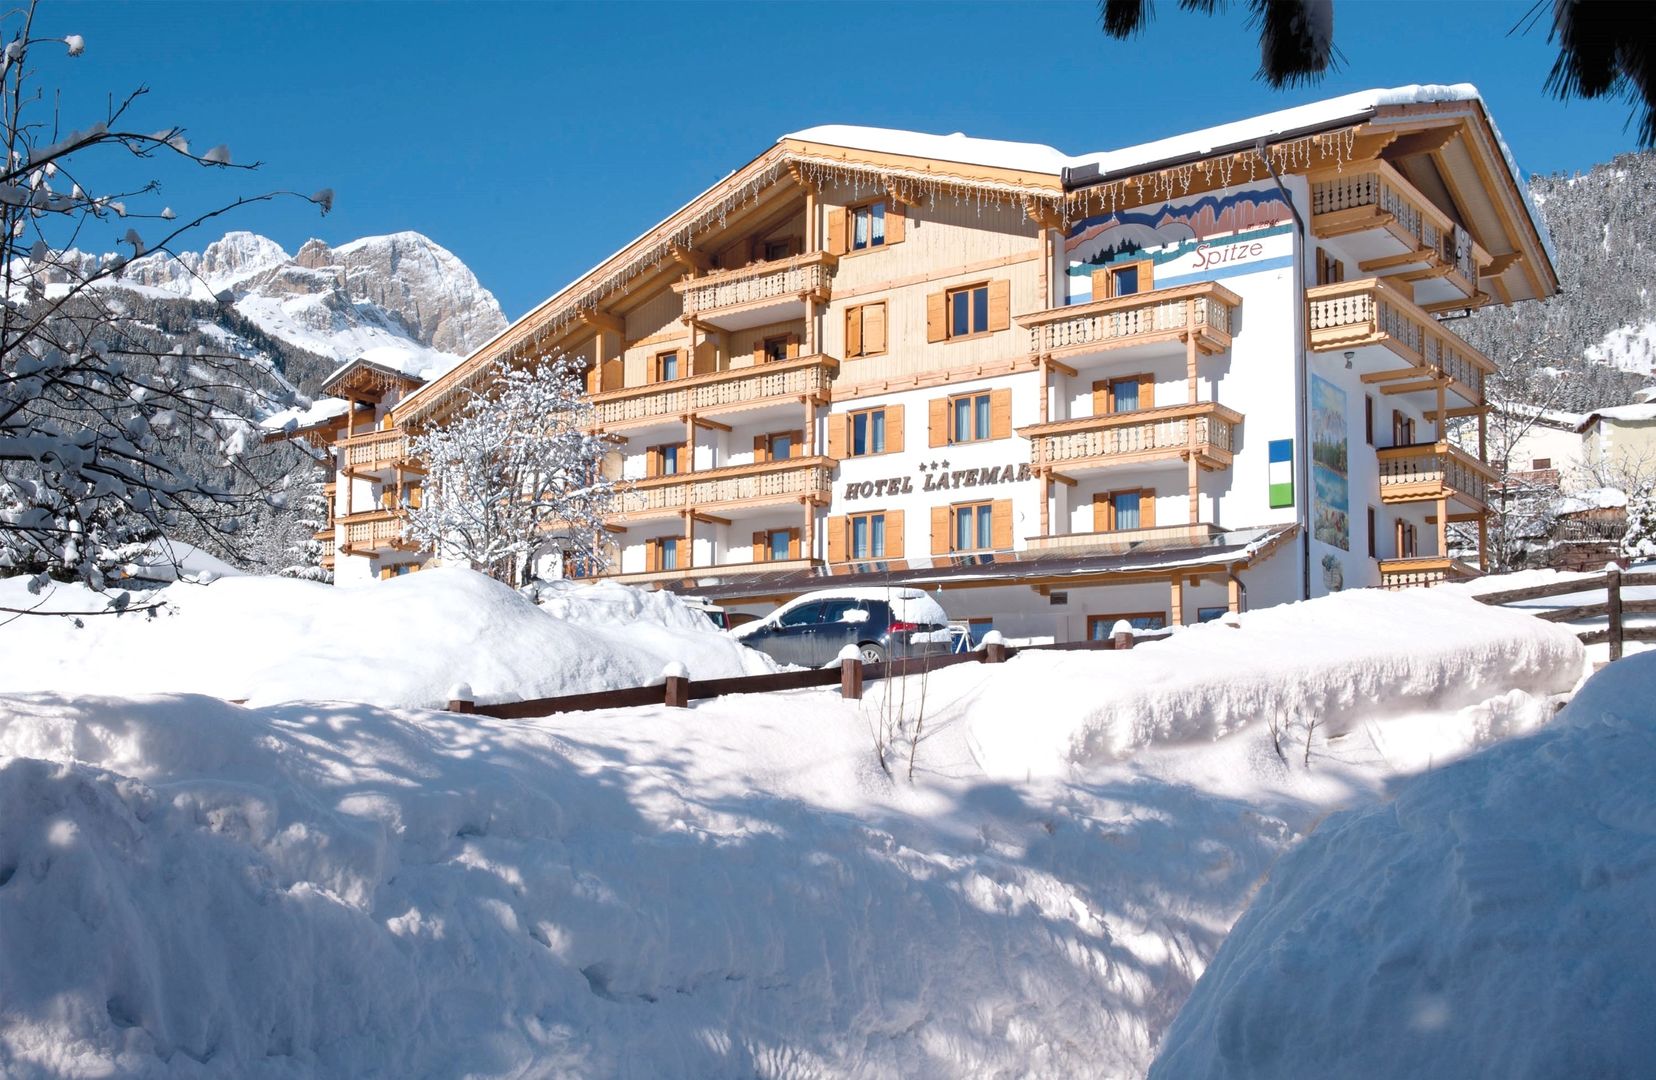 Hotel Latemar in Fassatal (Dolomiten), Hotel Latemar / Italien